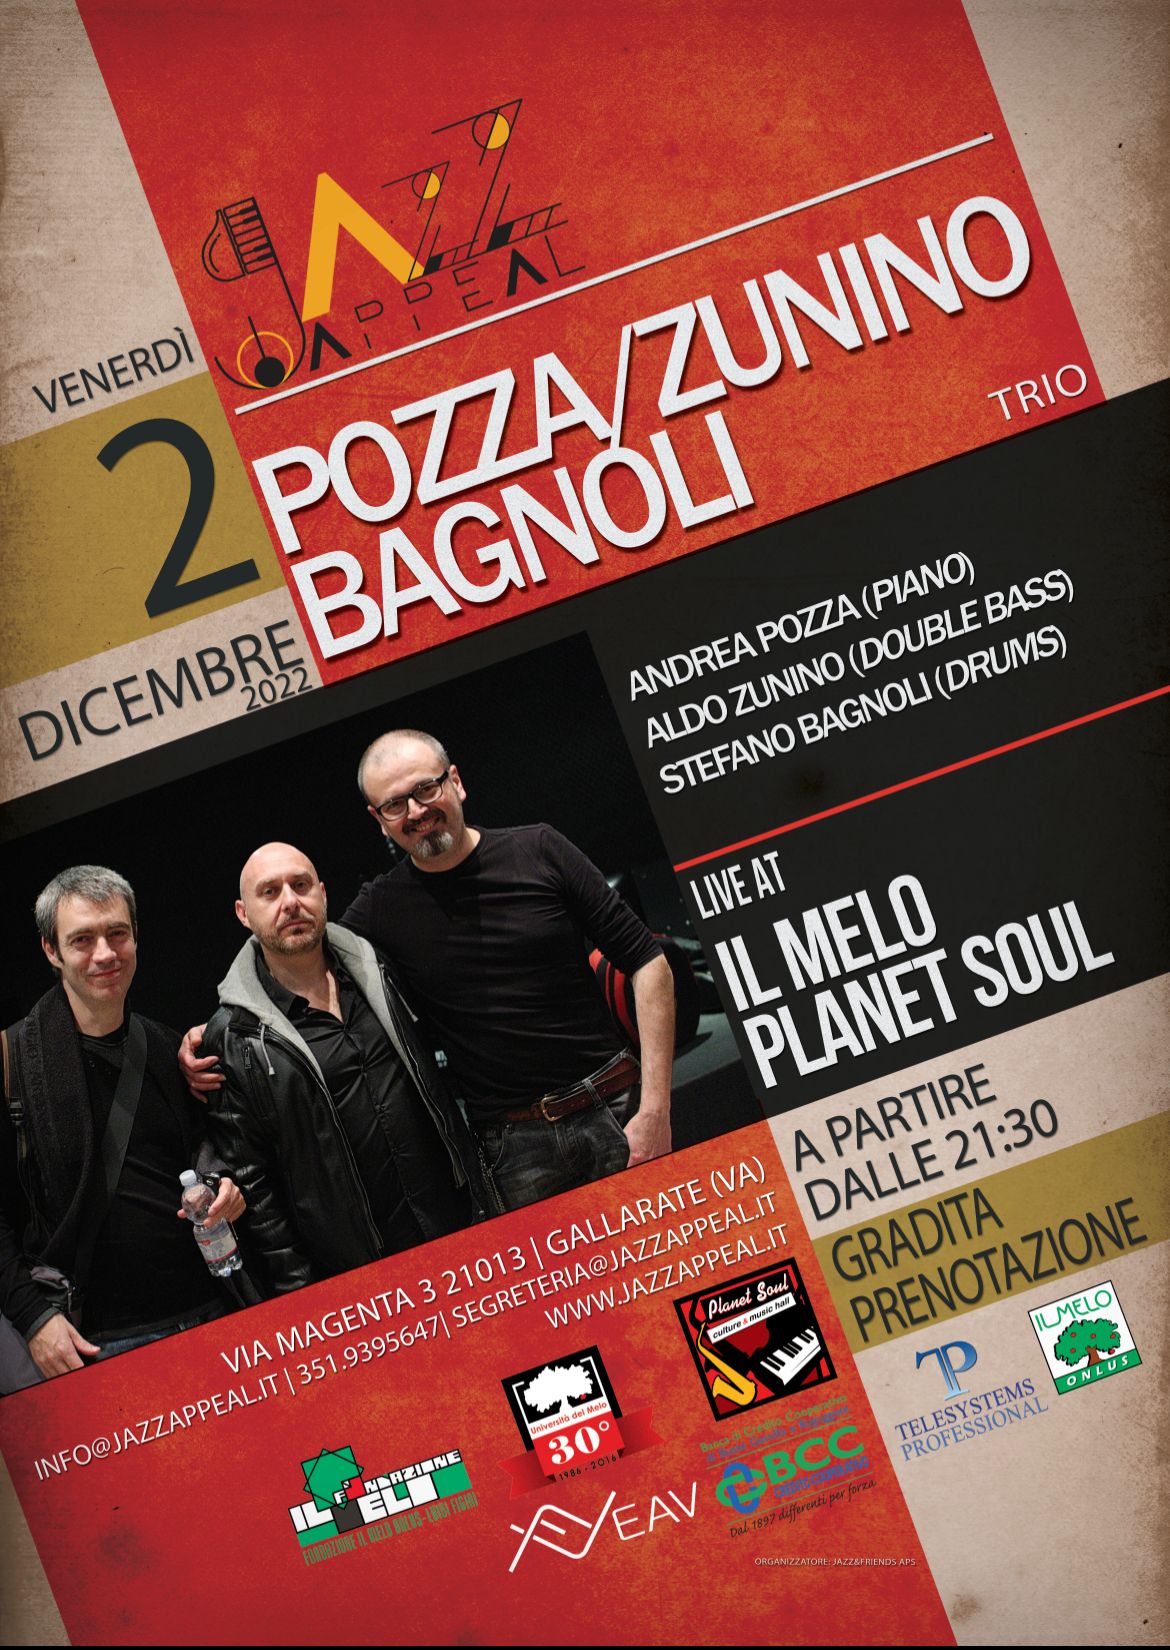 Pozza Zunino Bagnoli trio Jazz Appeal